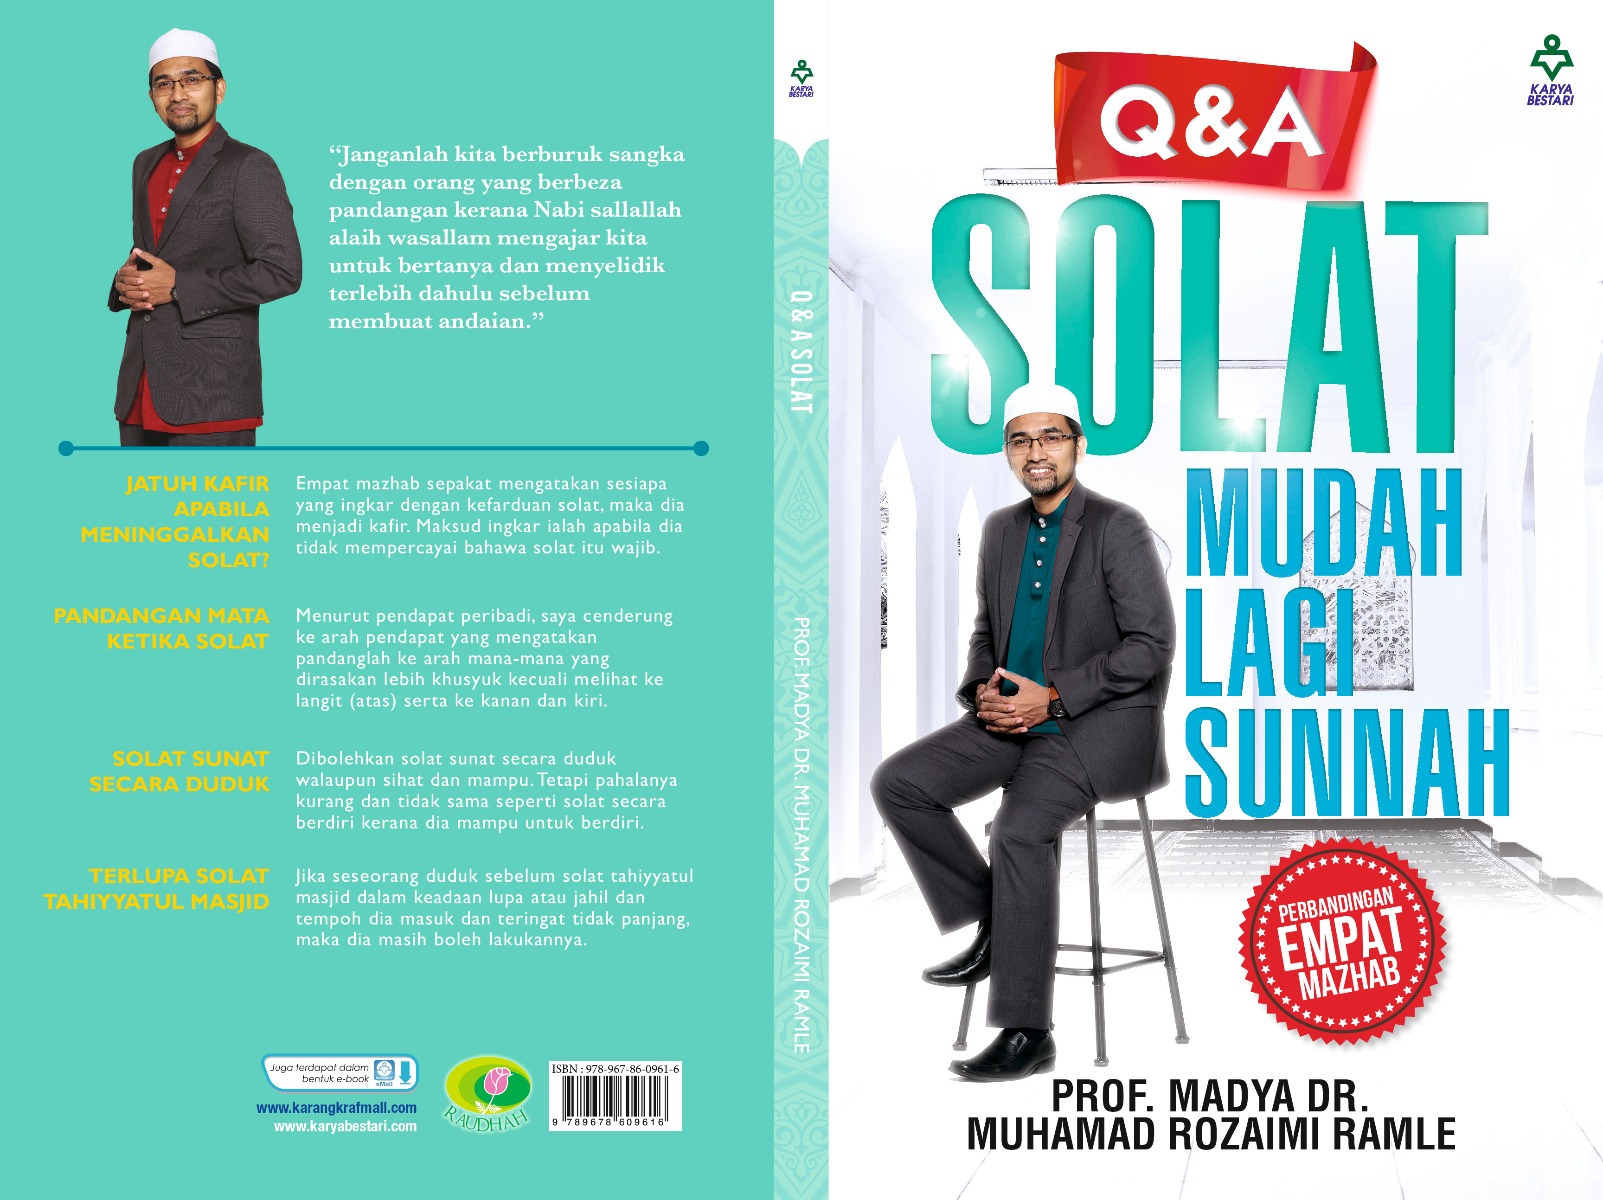 Q&A  Solat Mudah Lagi Sunnah - Prof. Madya Dr. Muhamad Rozaimi R